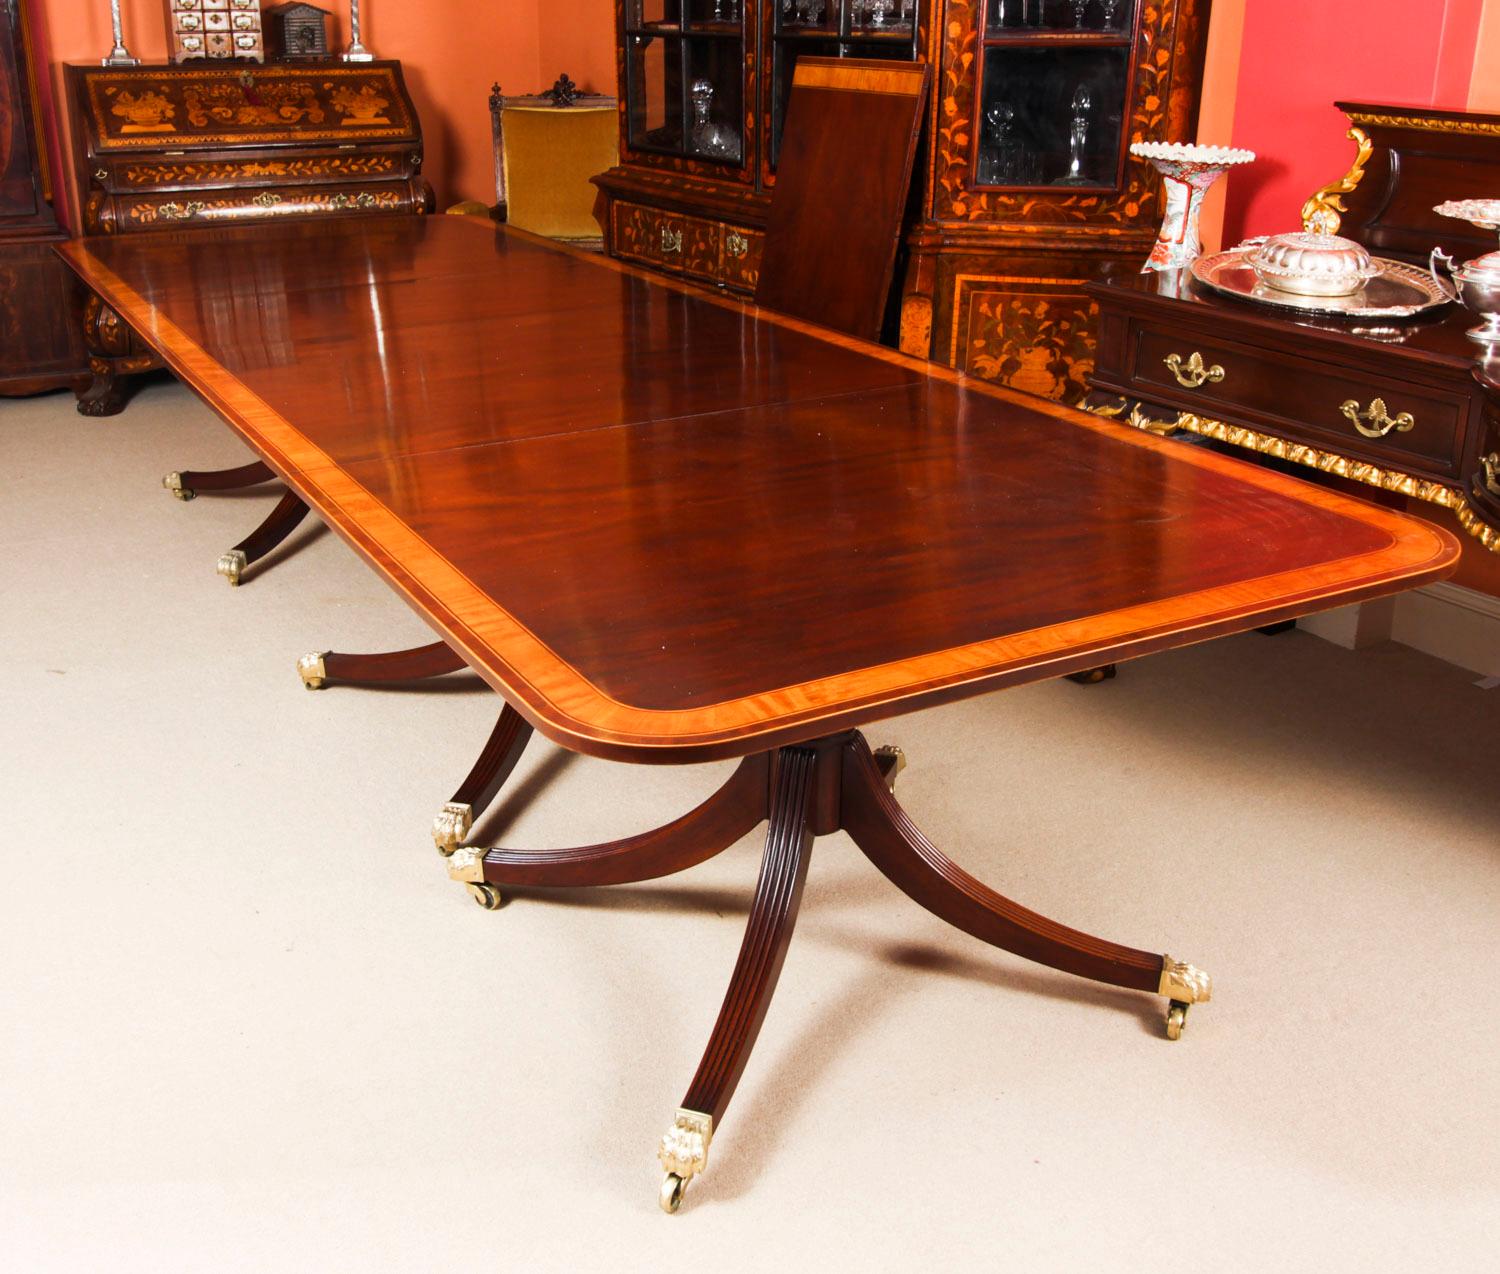 Mahogany Antique Regency Revival Metamorphic Dining Table, 19th Century